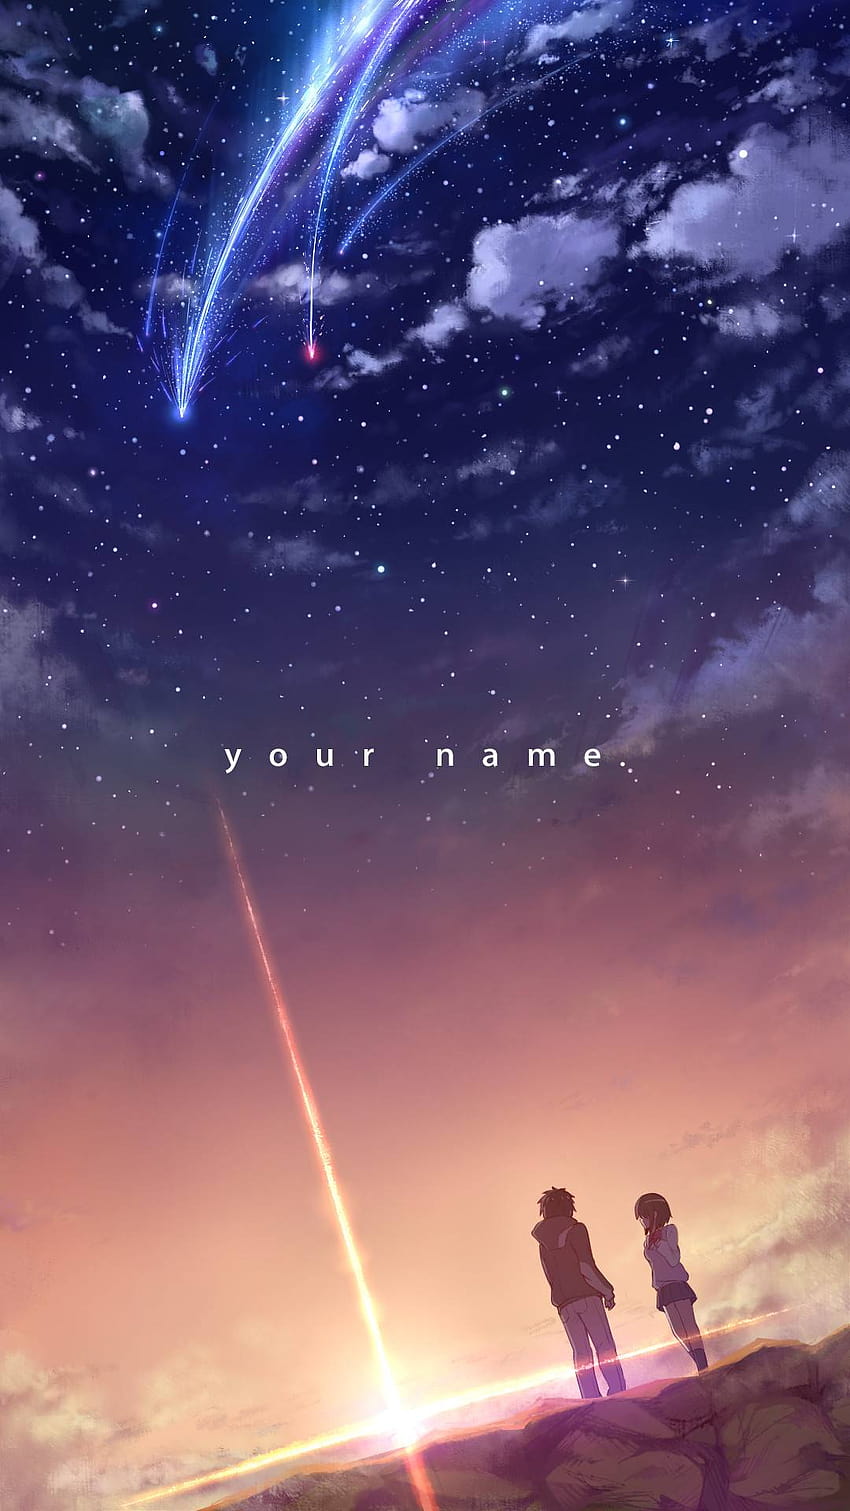 Your Name/Kimi no na wa HD phone wallpaper